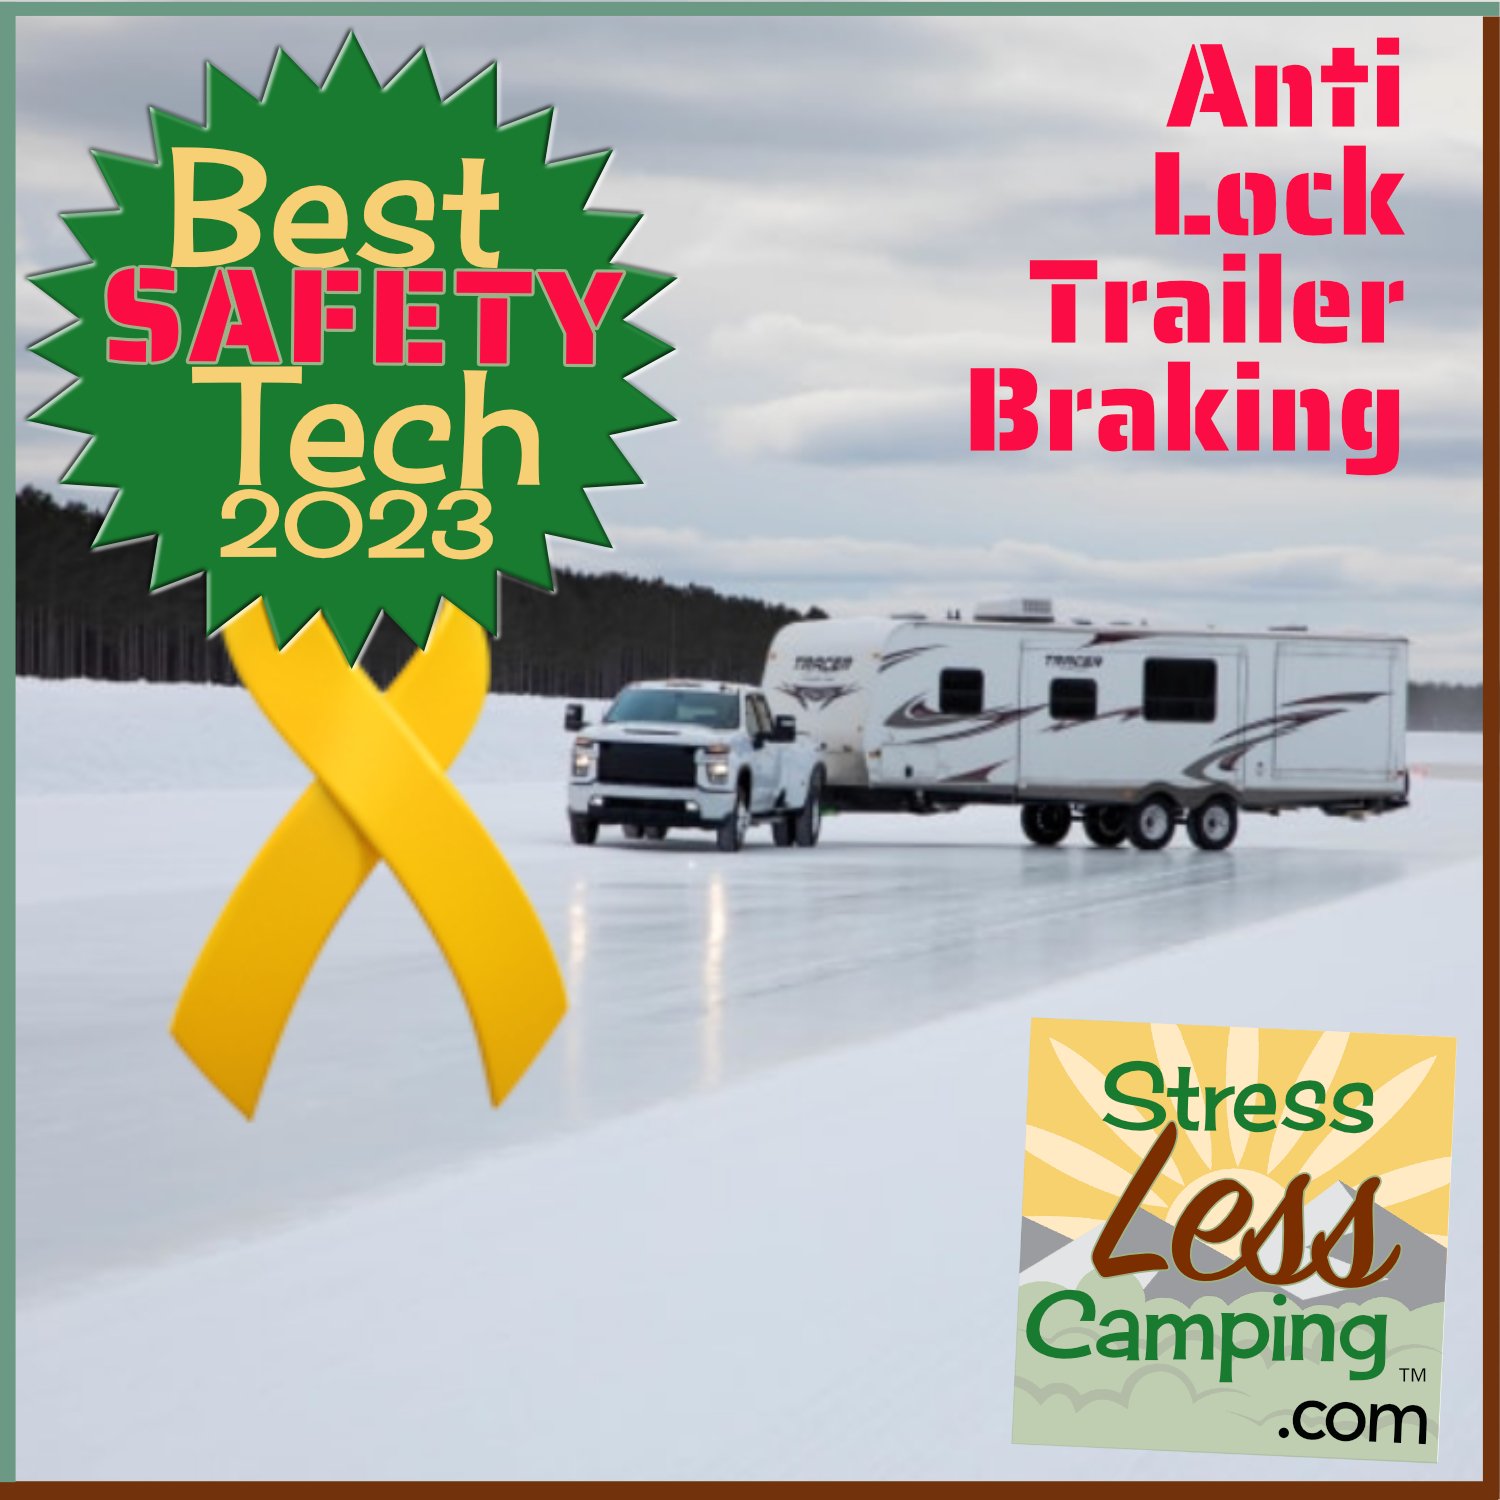 Best new safety technology for 2023 - anti-lock trailer braking